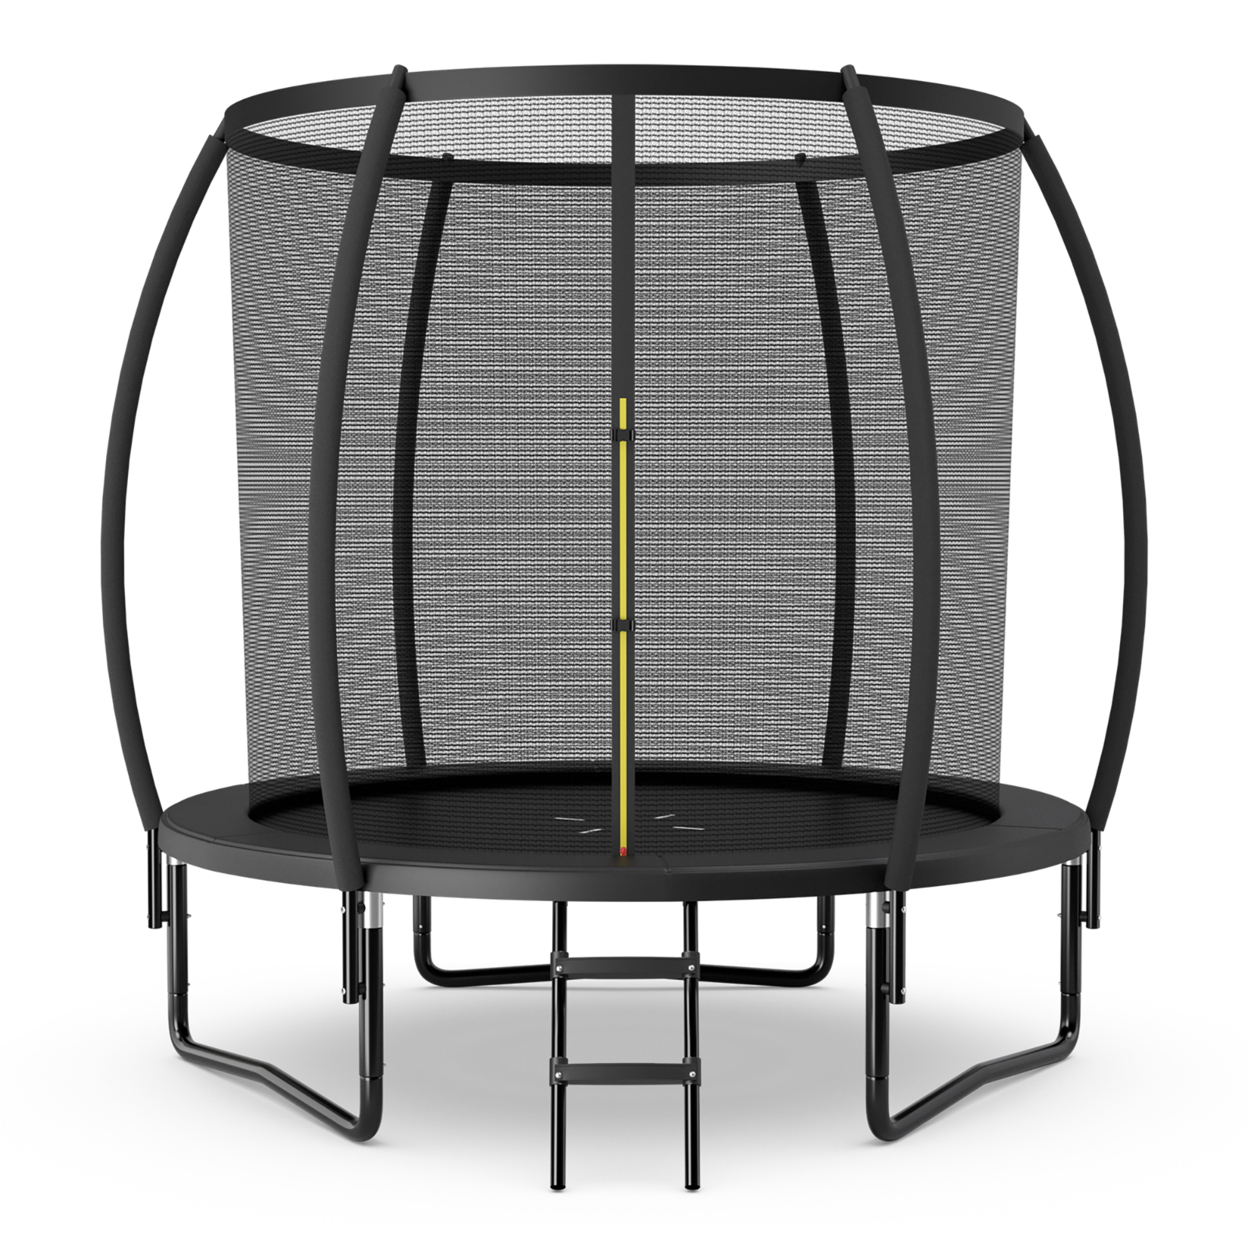 8FT Recreational Trampoline W/ Ladder Enclosure Net Safety Pad Outdoor - Black